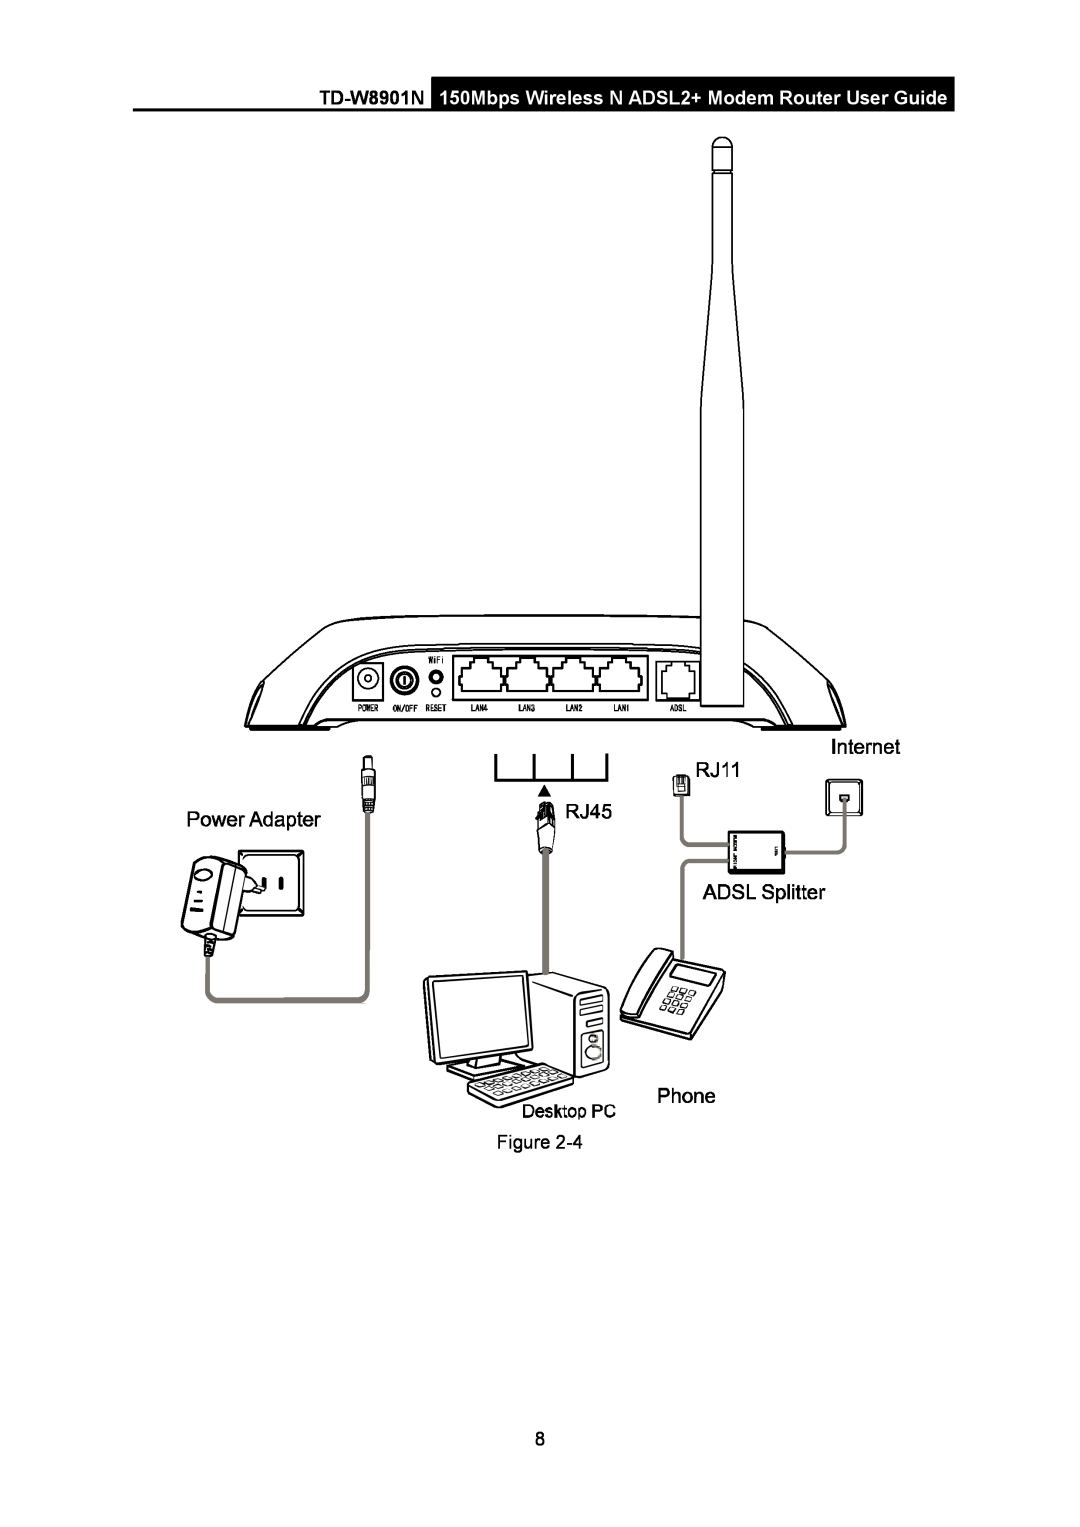 TP-Link manual TD-W8901N 150Mbps Wireless N ADSL2+ Modem Router User Guide 